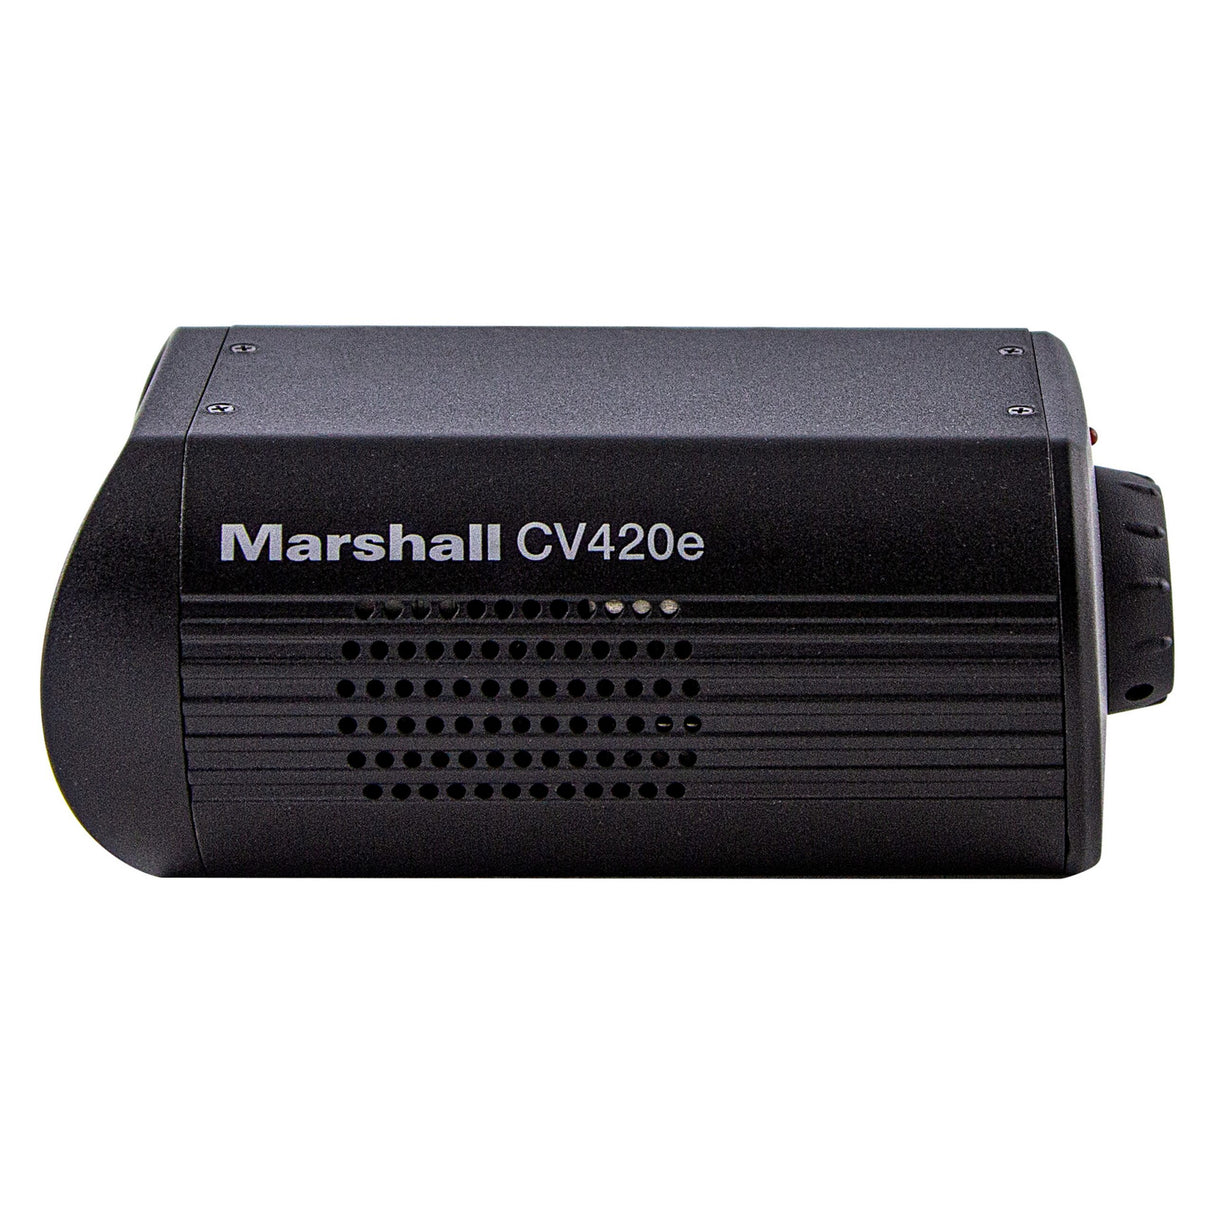 Marshall Electronics CV420e Compact 4K60 ePTZ Camera with HDMI, IP and USB